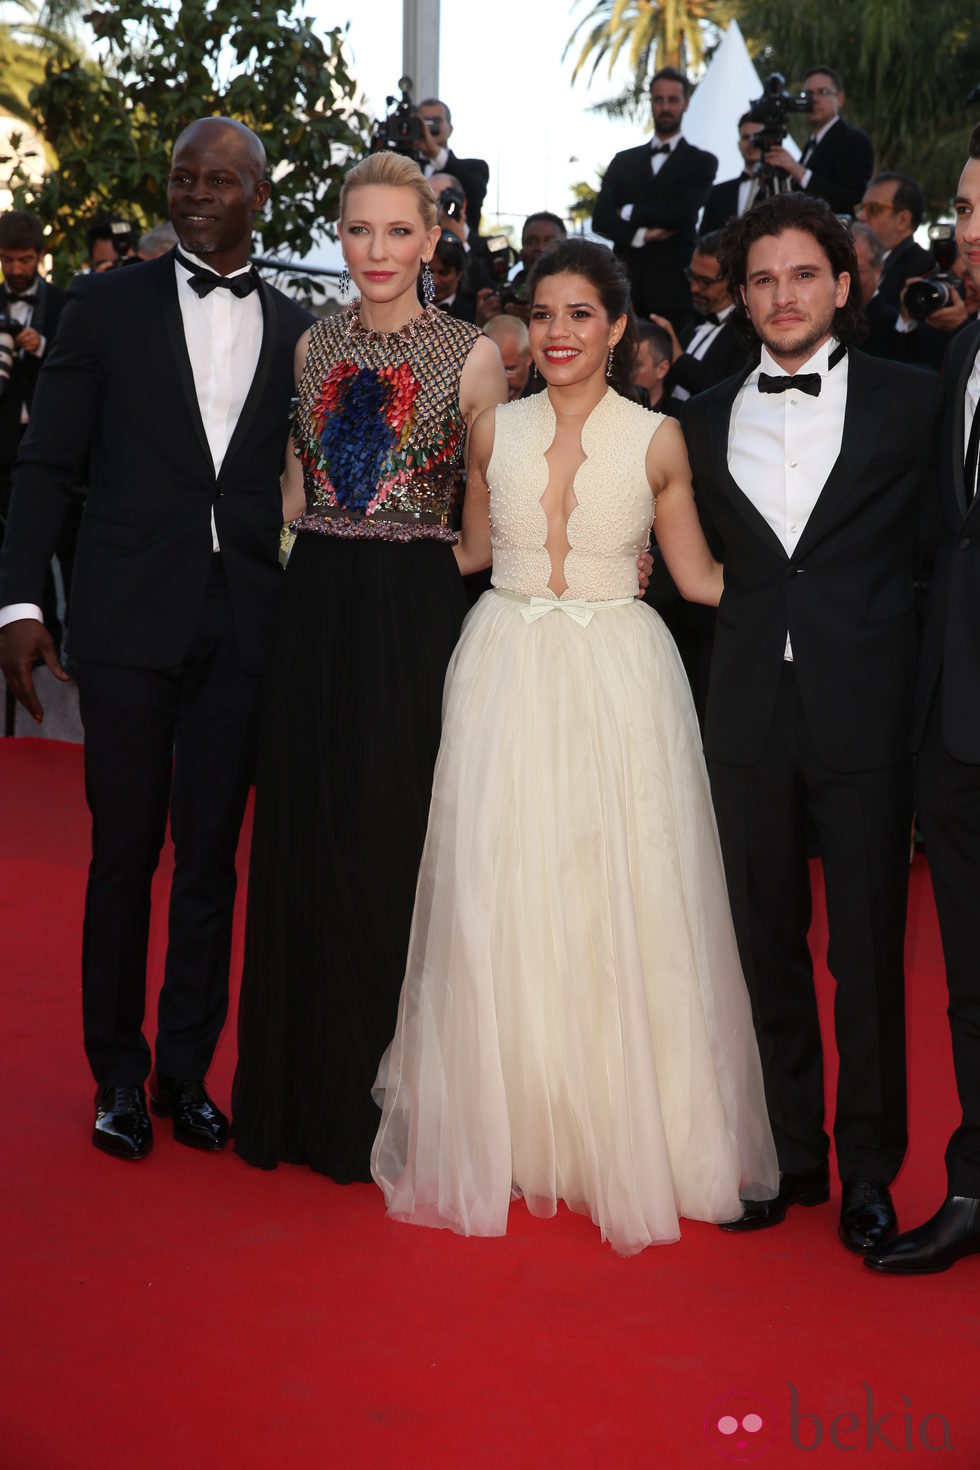 America Ferrera, Cate Blanchett, Jay Baruchel y Kit Harington posando en el Festival de Cannes 2014